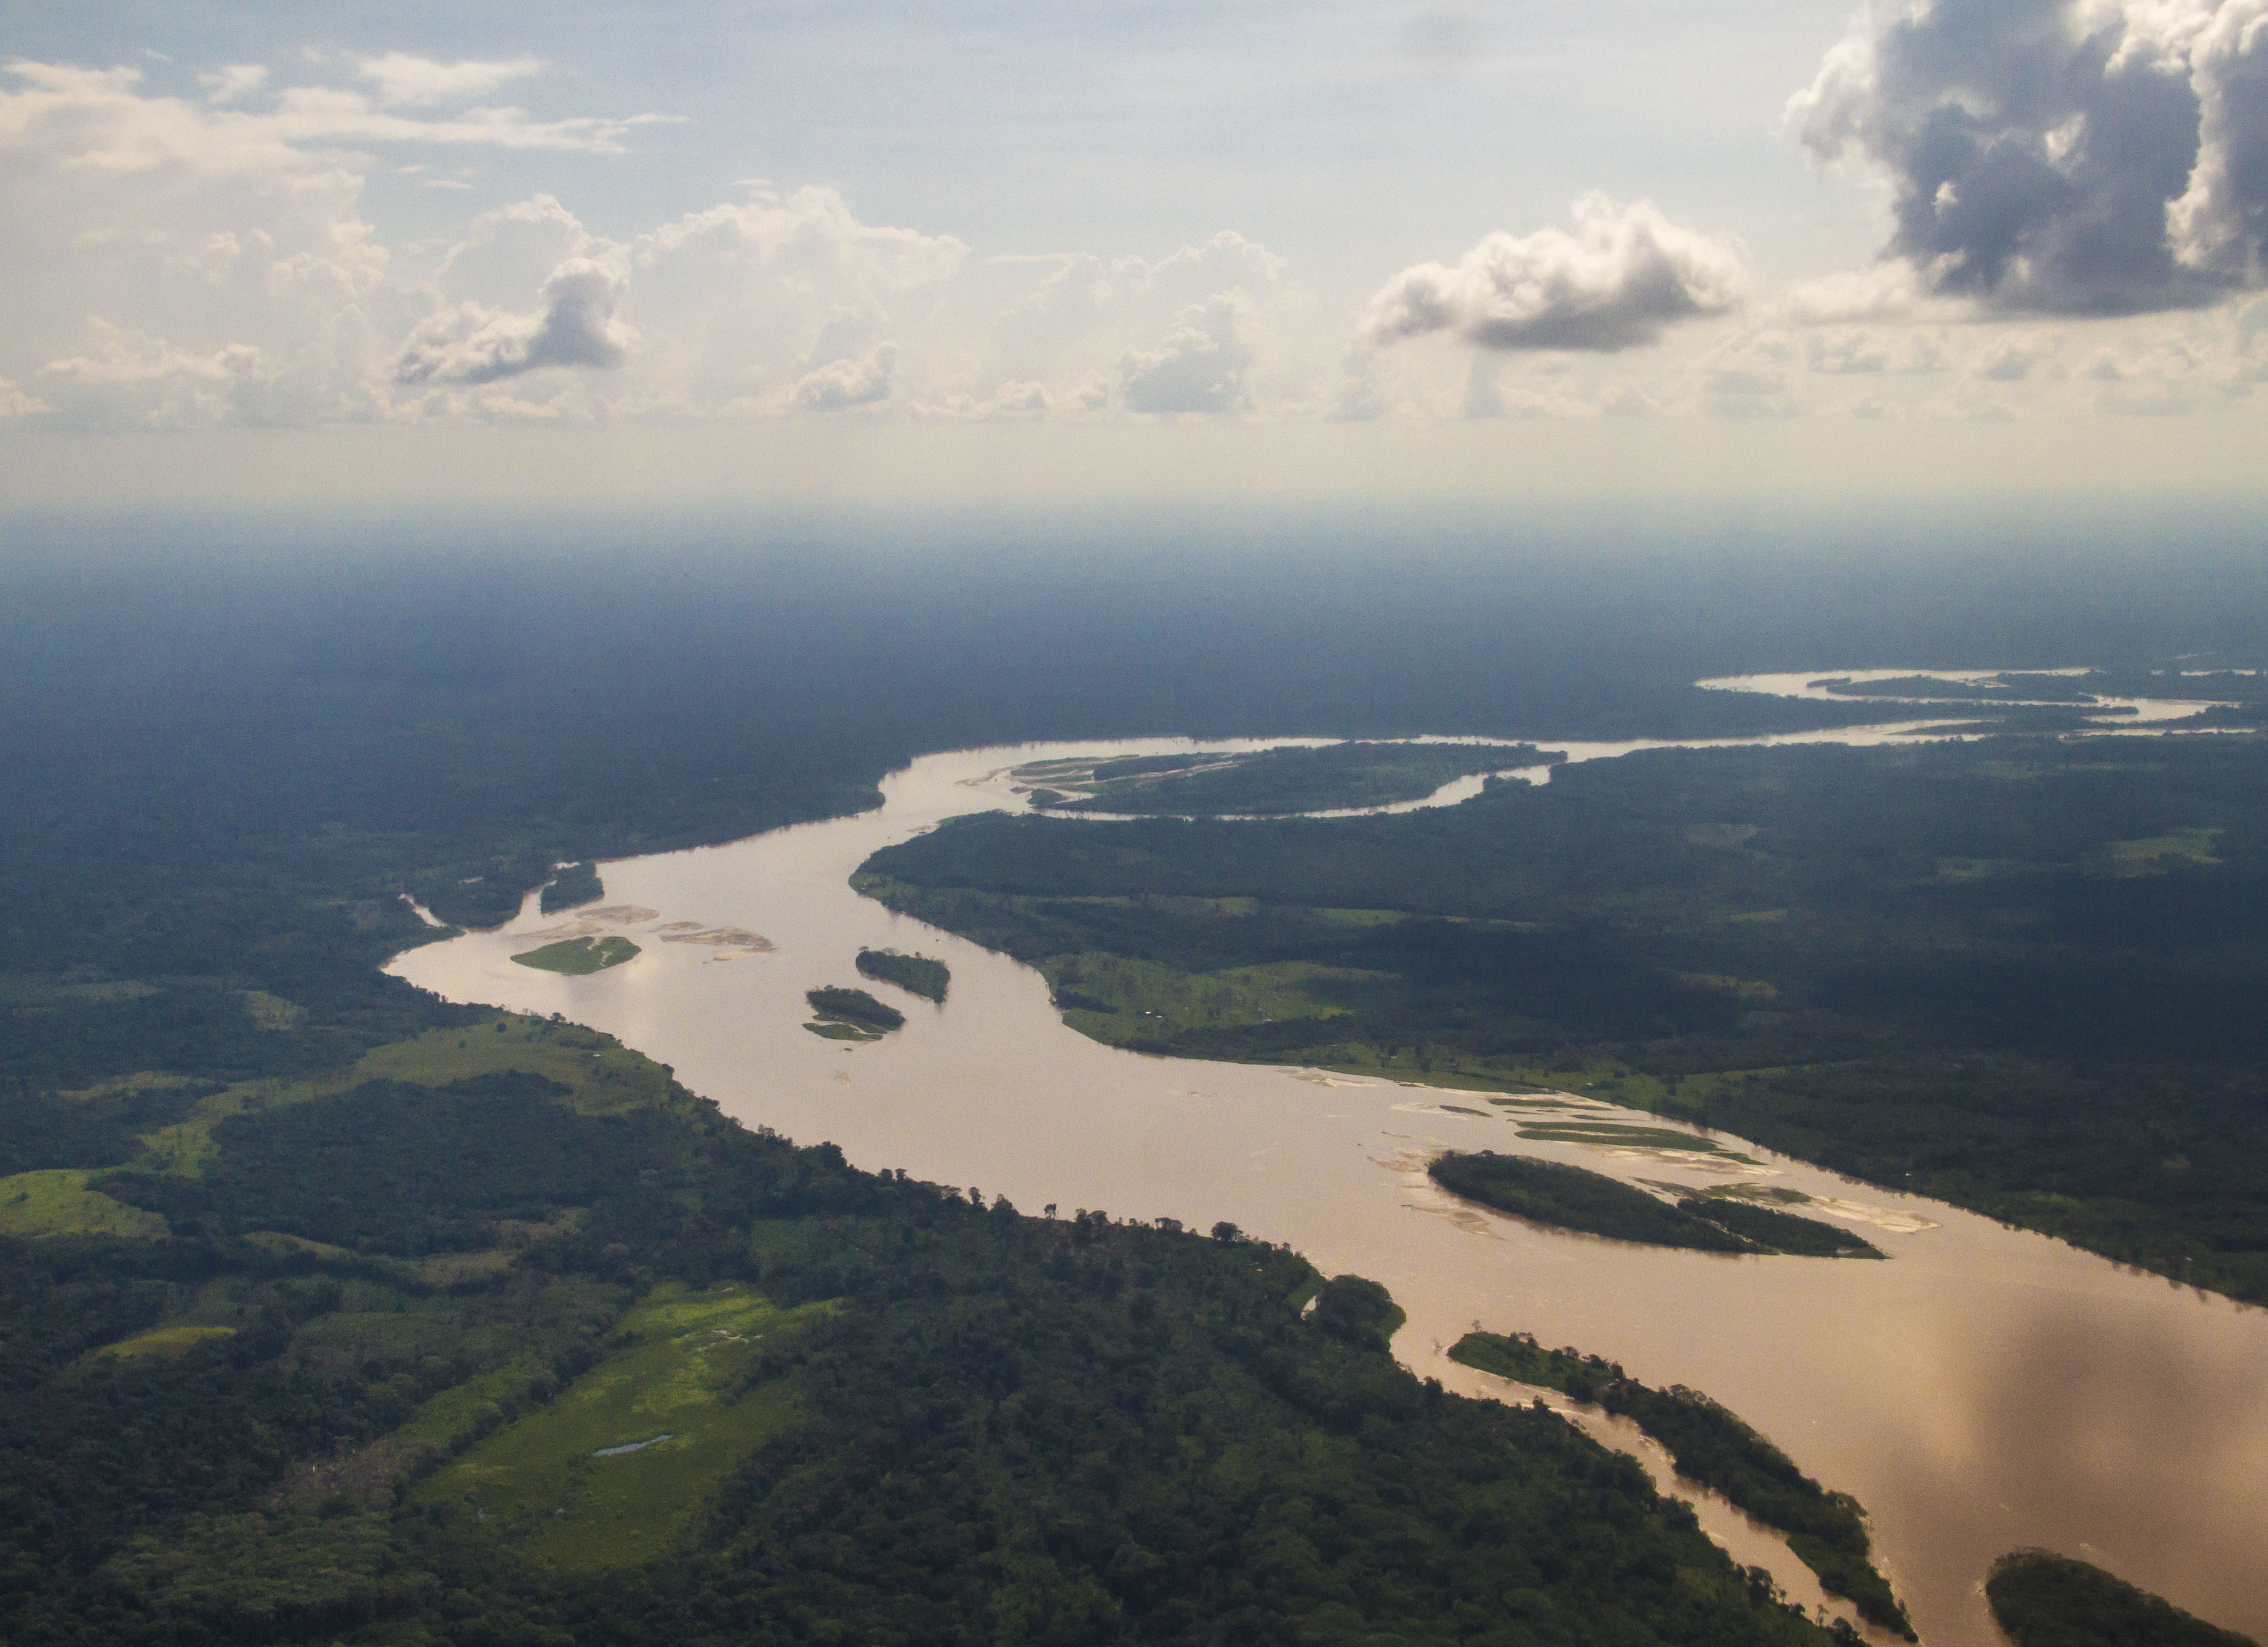 Amazon basin